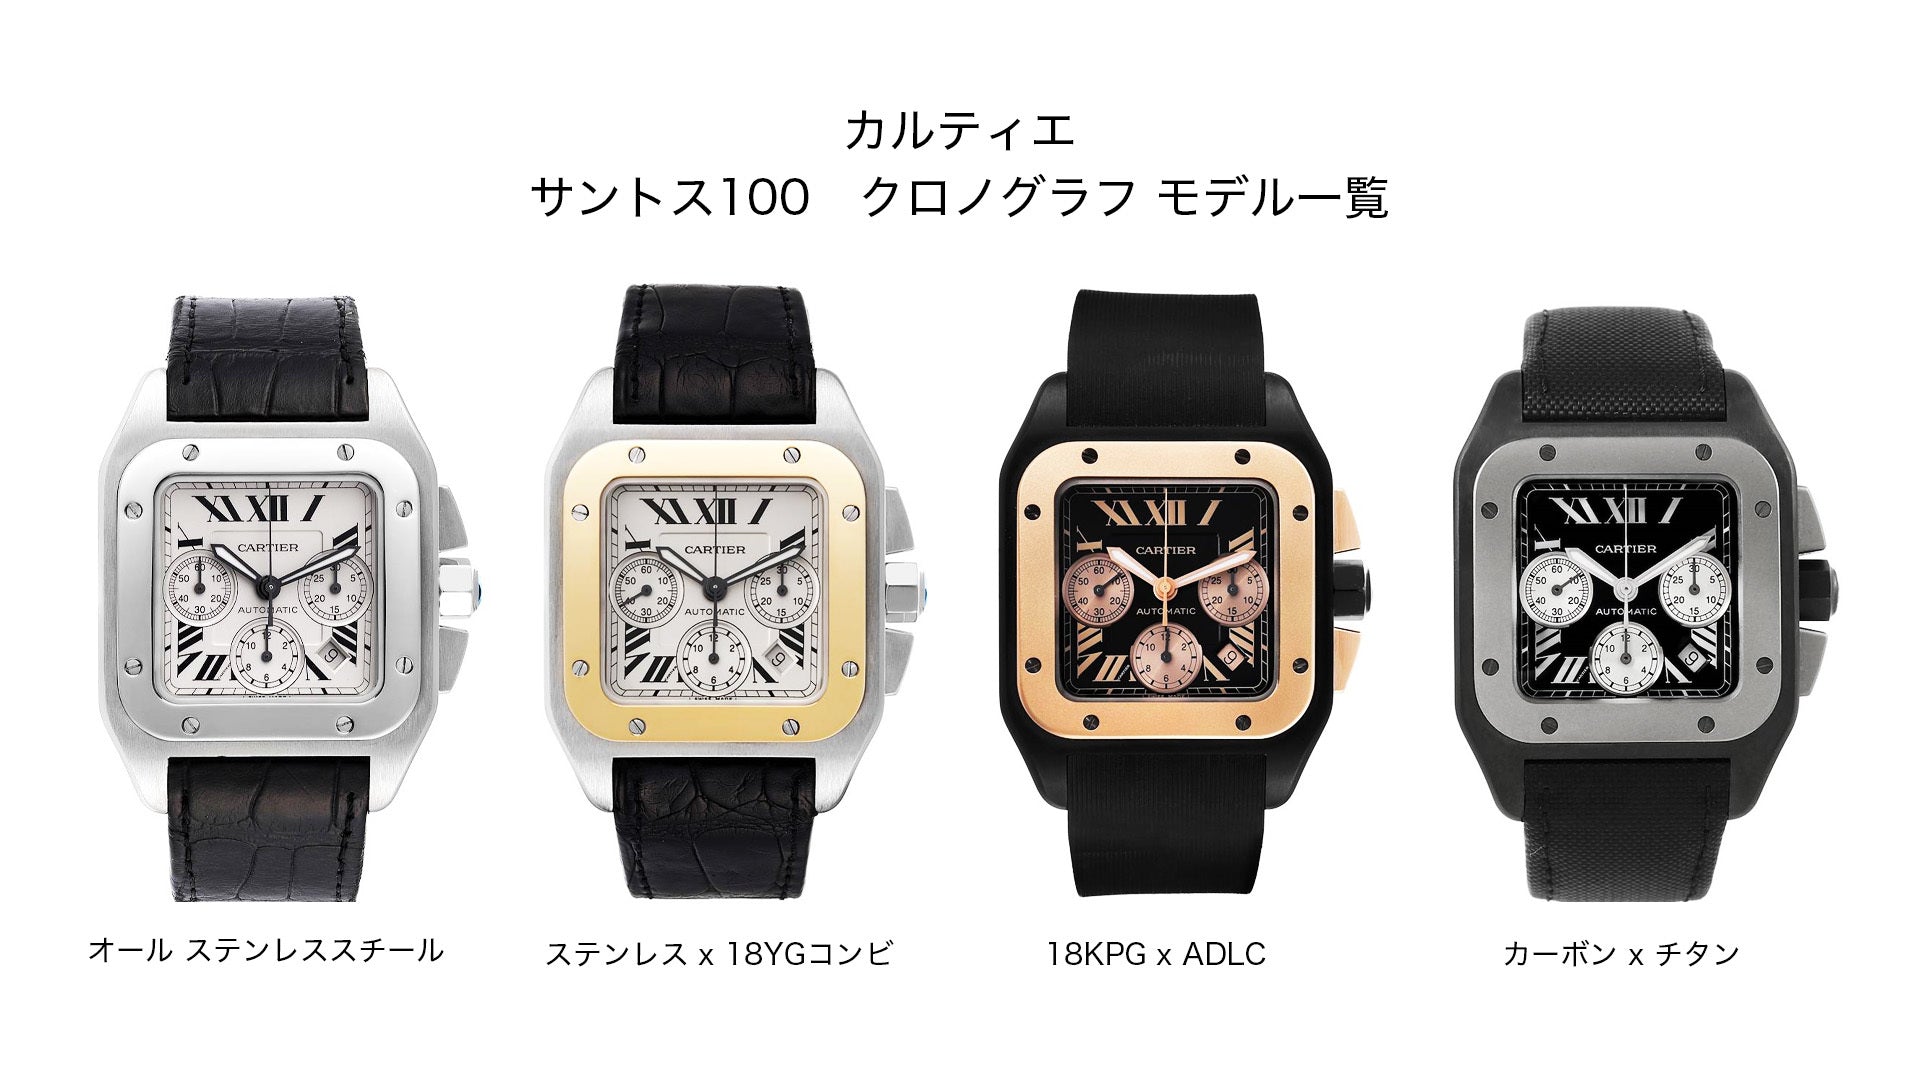 Cartier watch "Santos 100" chronograph model list